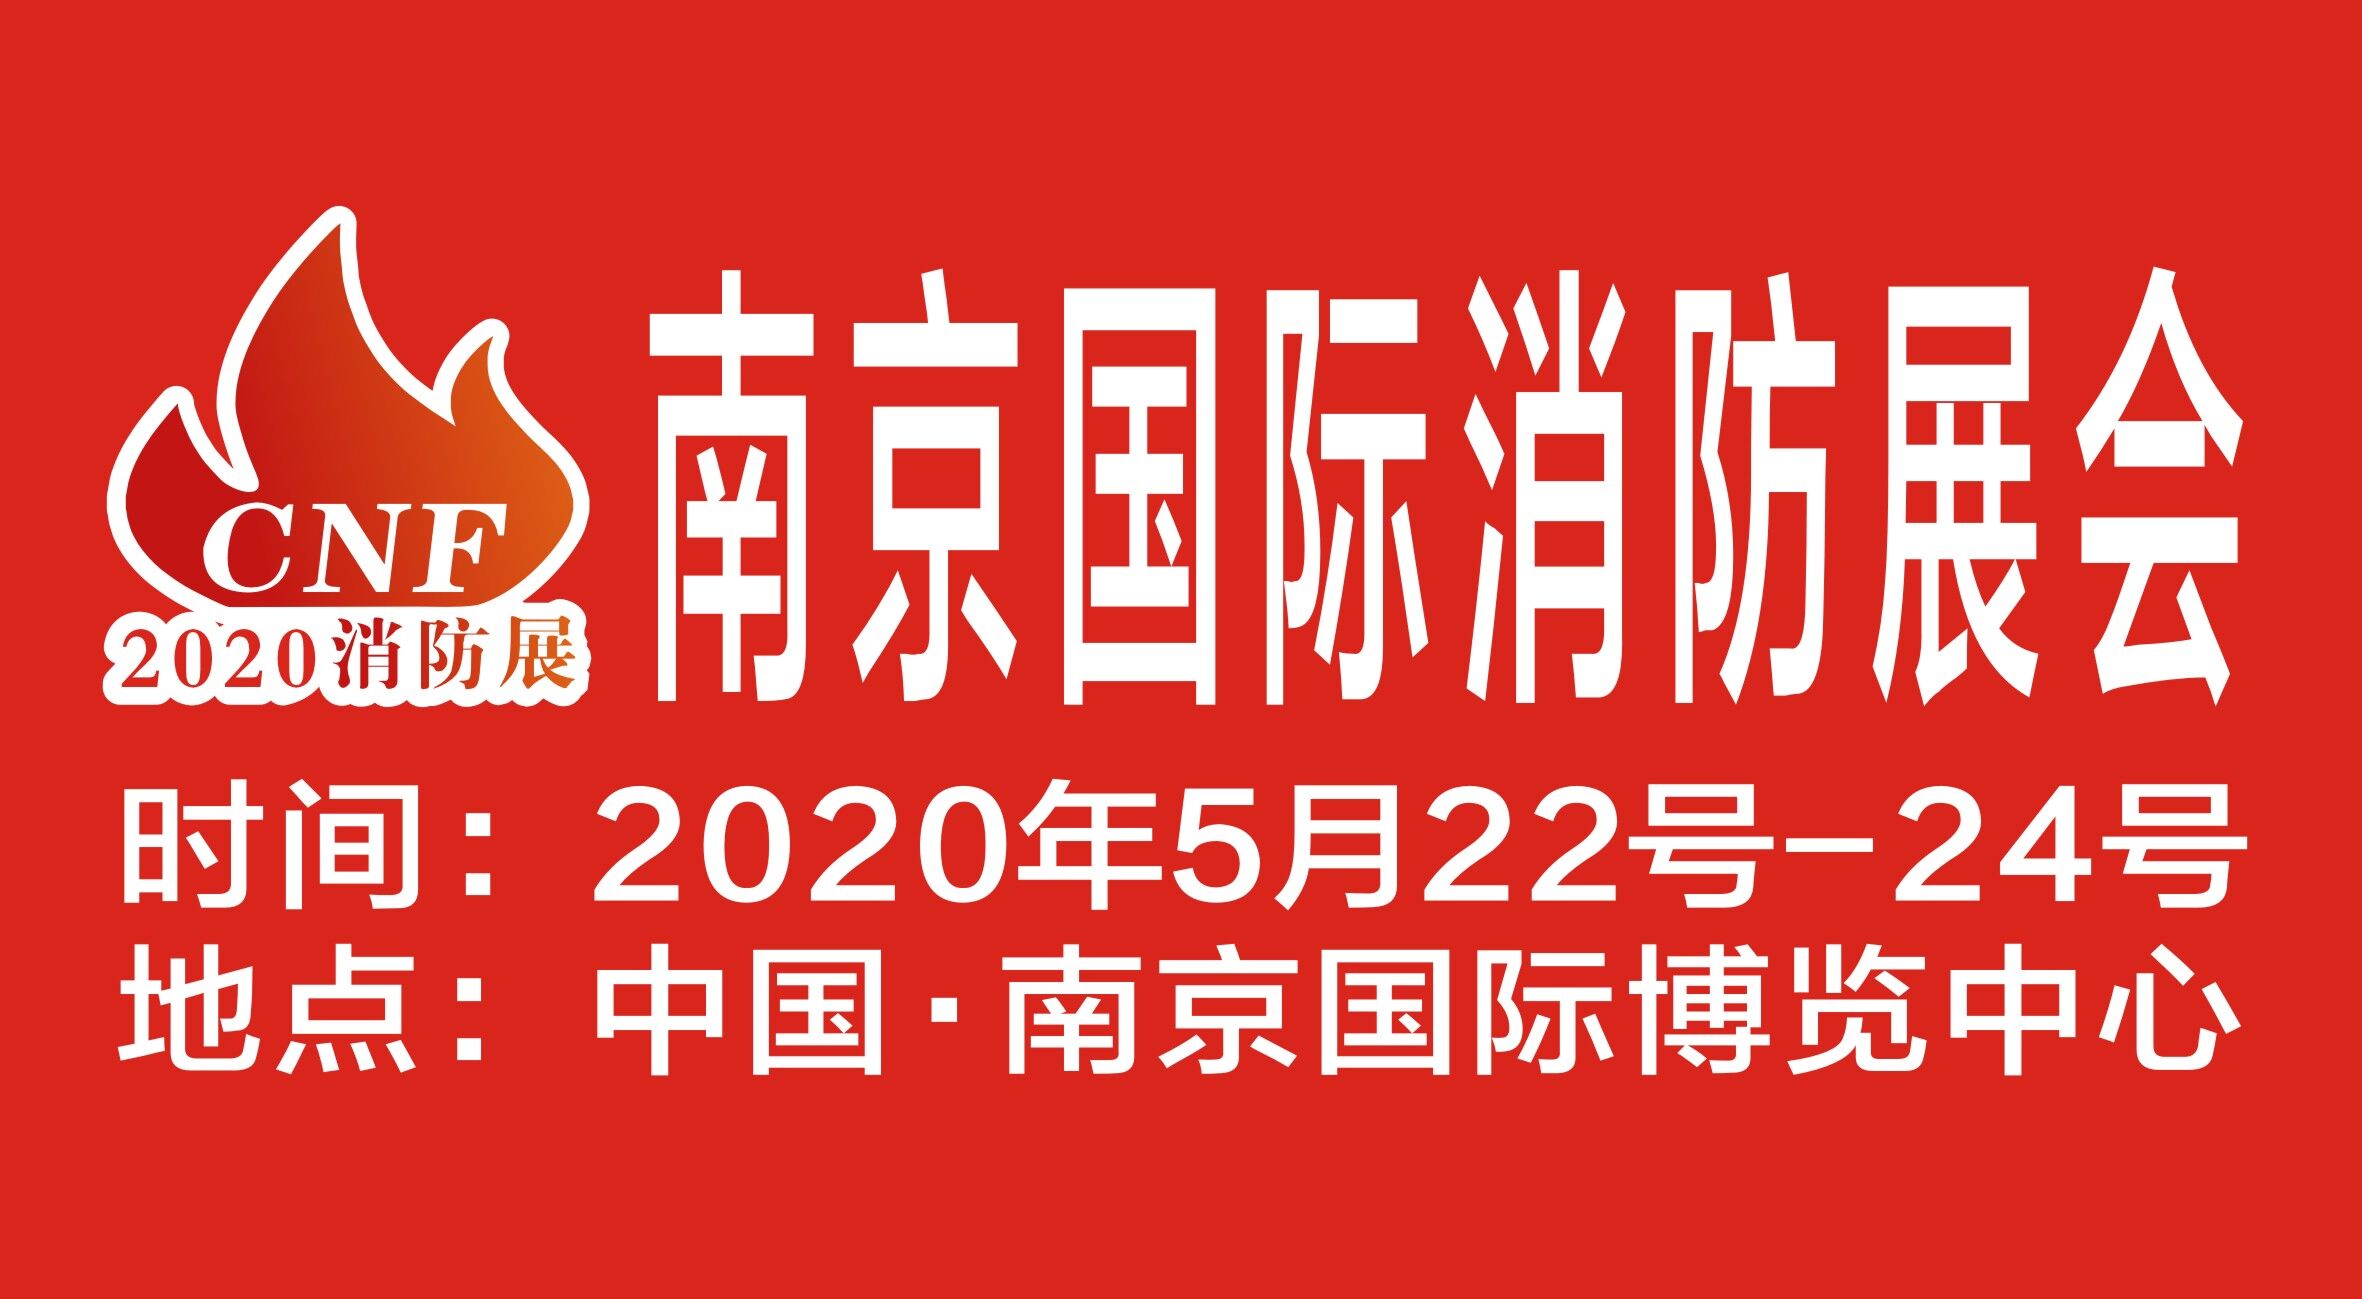 CNF南京国际消防展览会 丨众能联合邀您参观5月22-24日